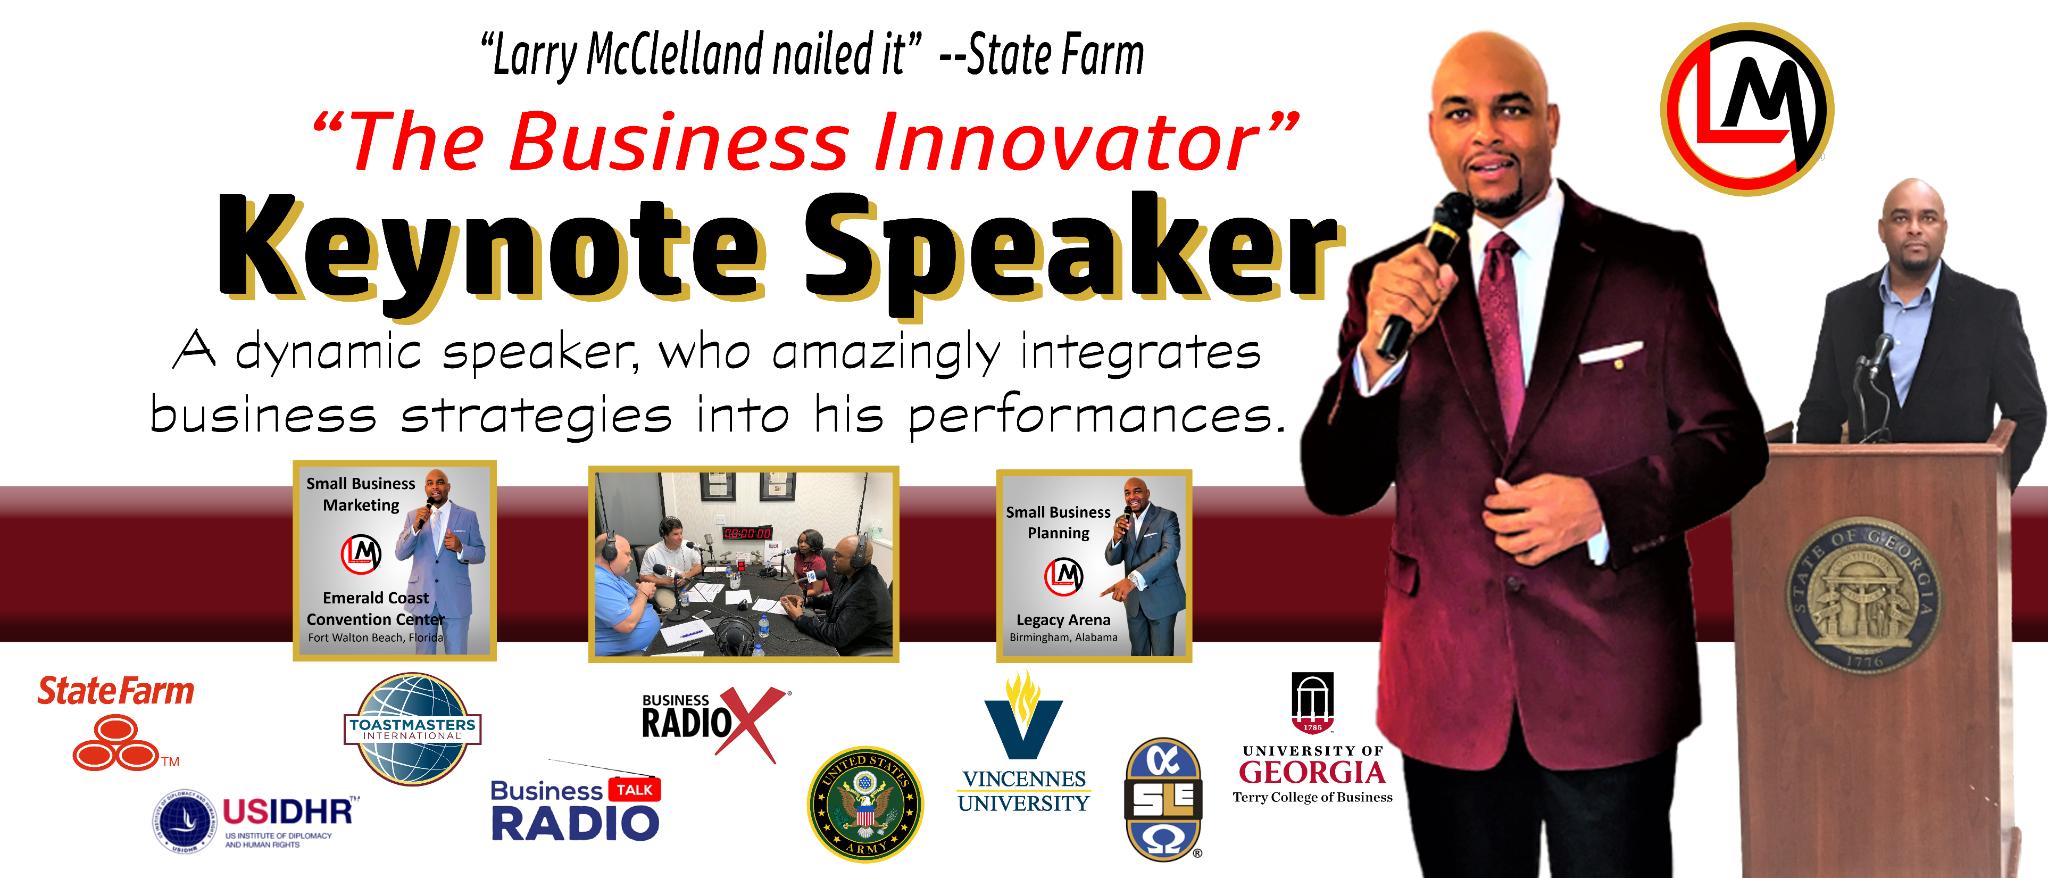 Larry McClelland - The Business Innovator - Keynote Speaker